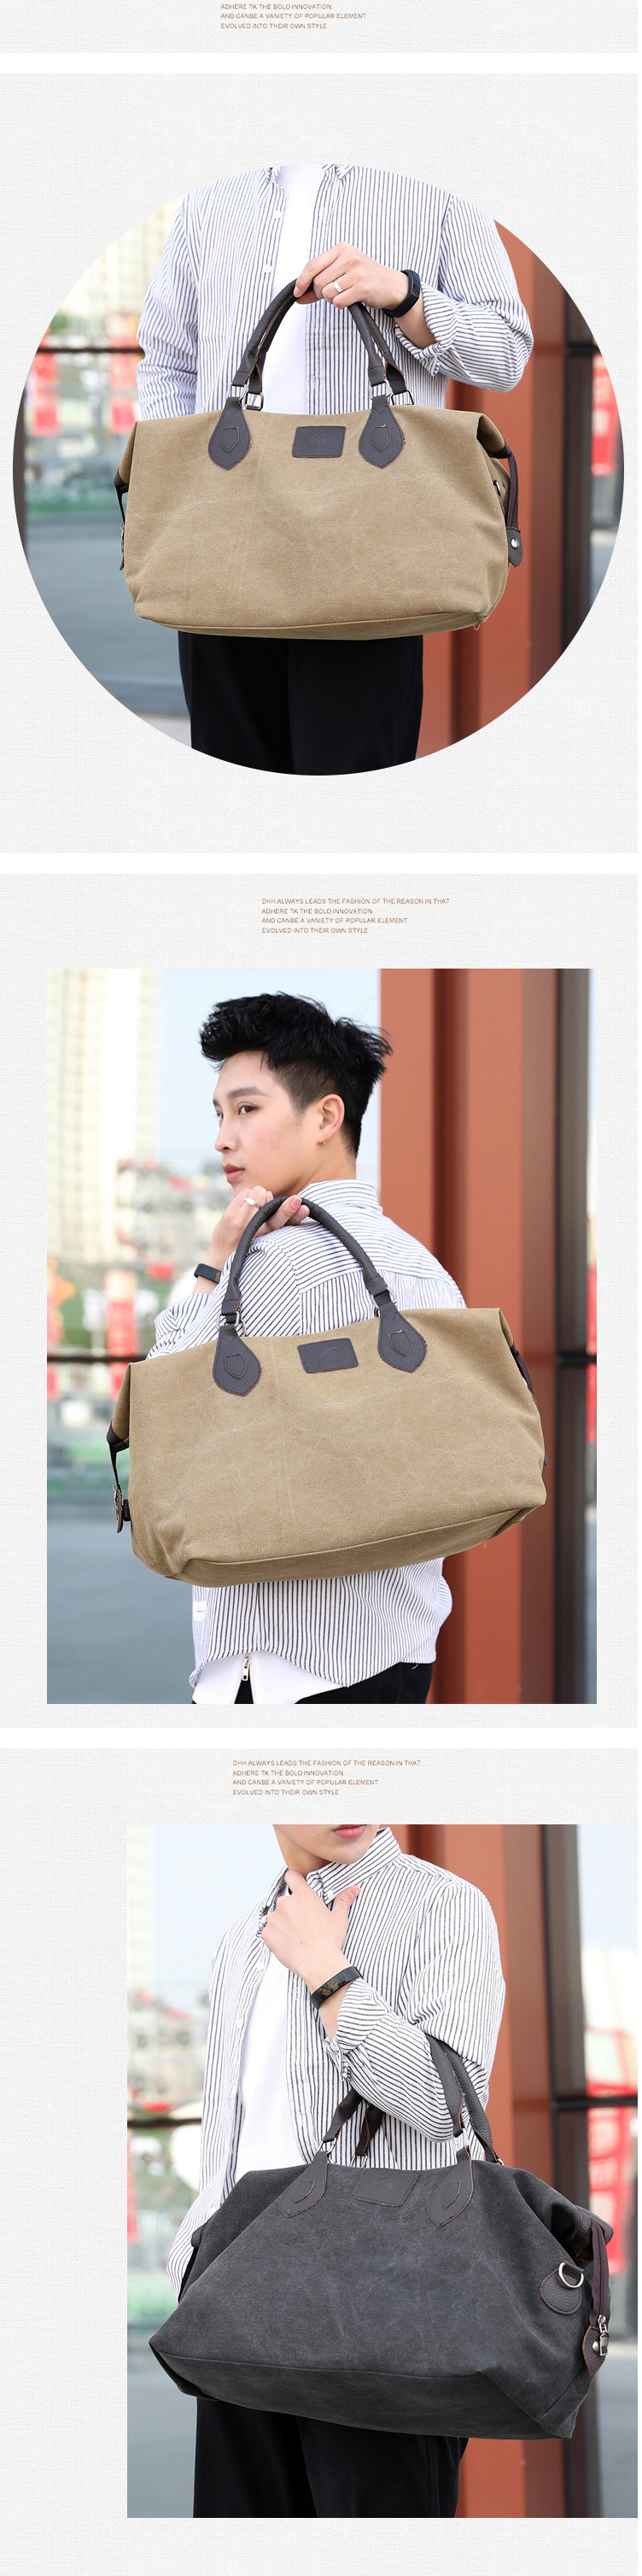 KVKY-Canvas-Travel-Bag-Outdoor-Men-Casual-Fashion-Handbag-Large-Capacity-Multifunctional-Bag-1556965-4